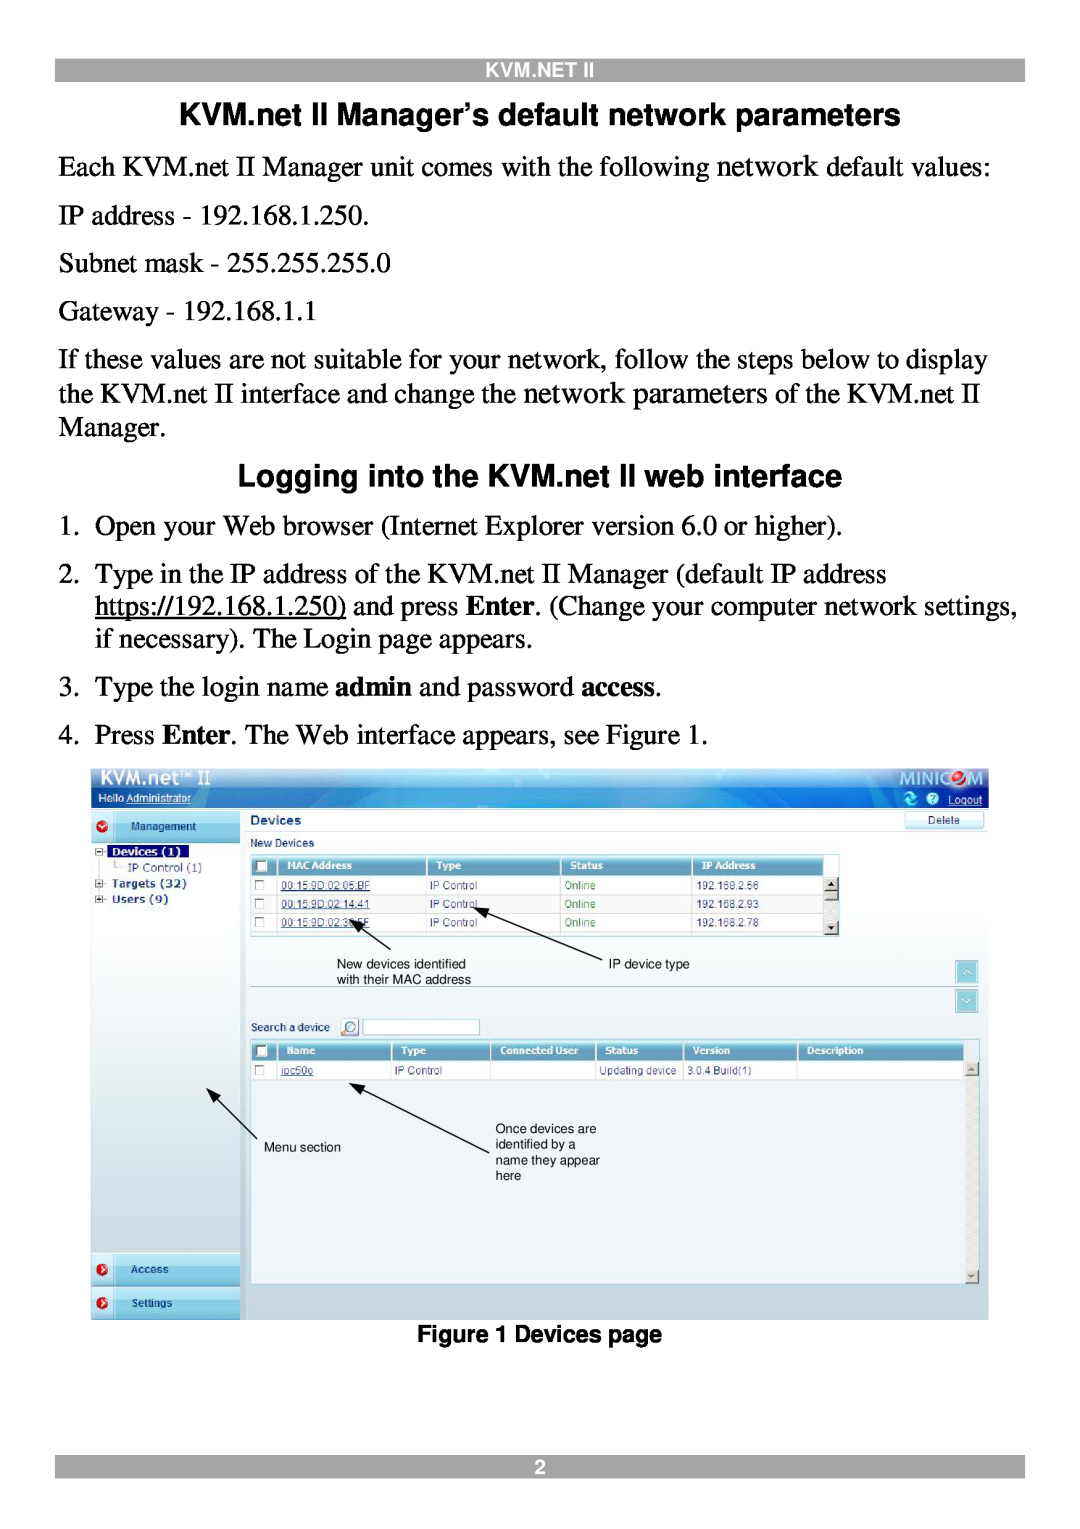 Minicom Advanced Systems KVM.net II Manager’s default network parameters, Logging into the KVM.net II web interface 